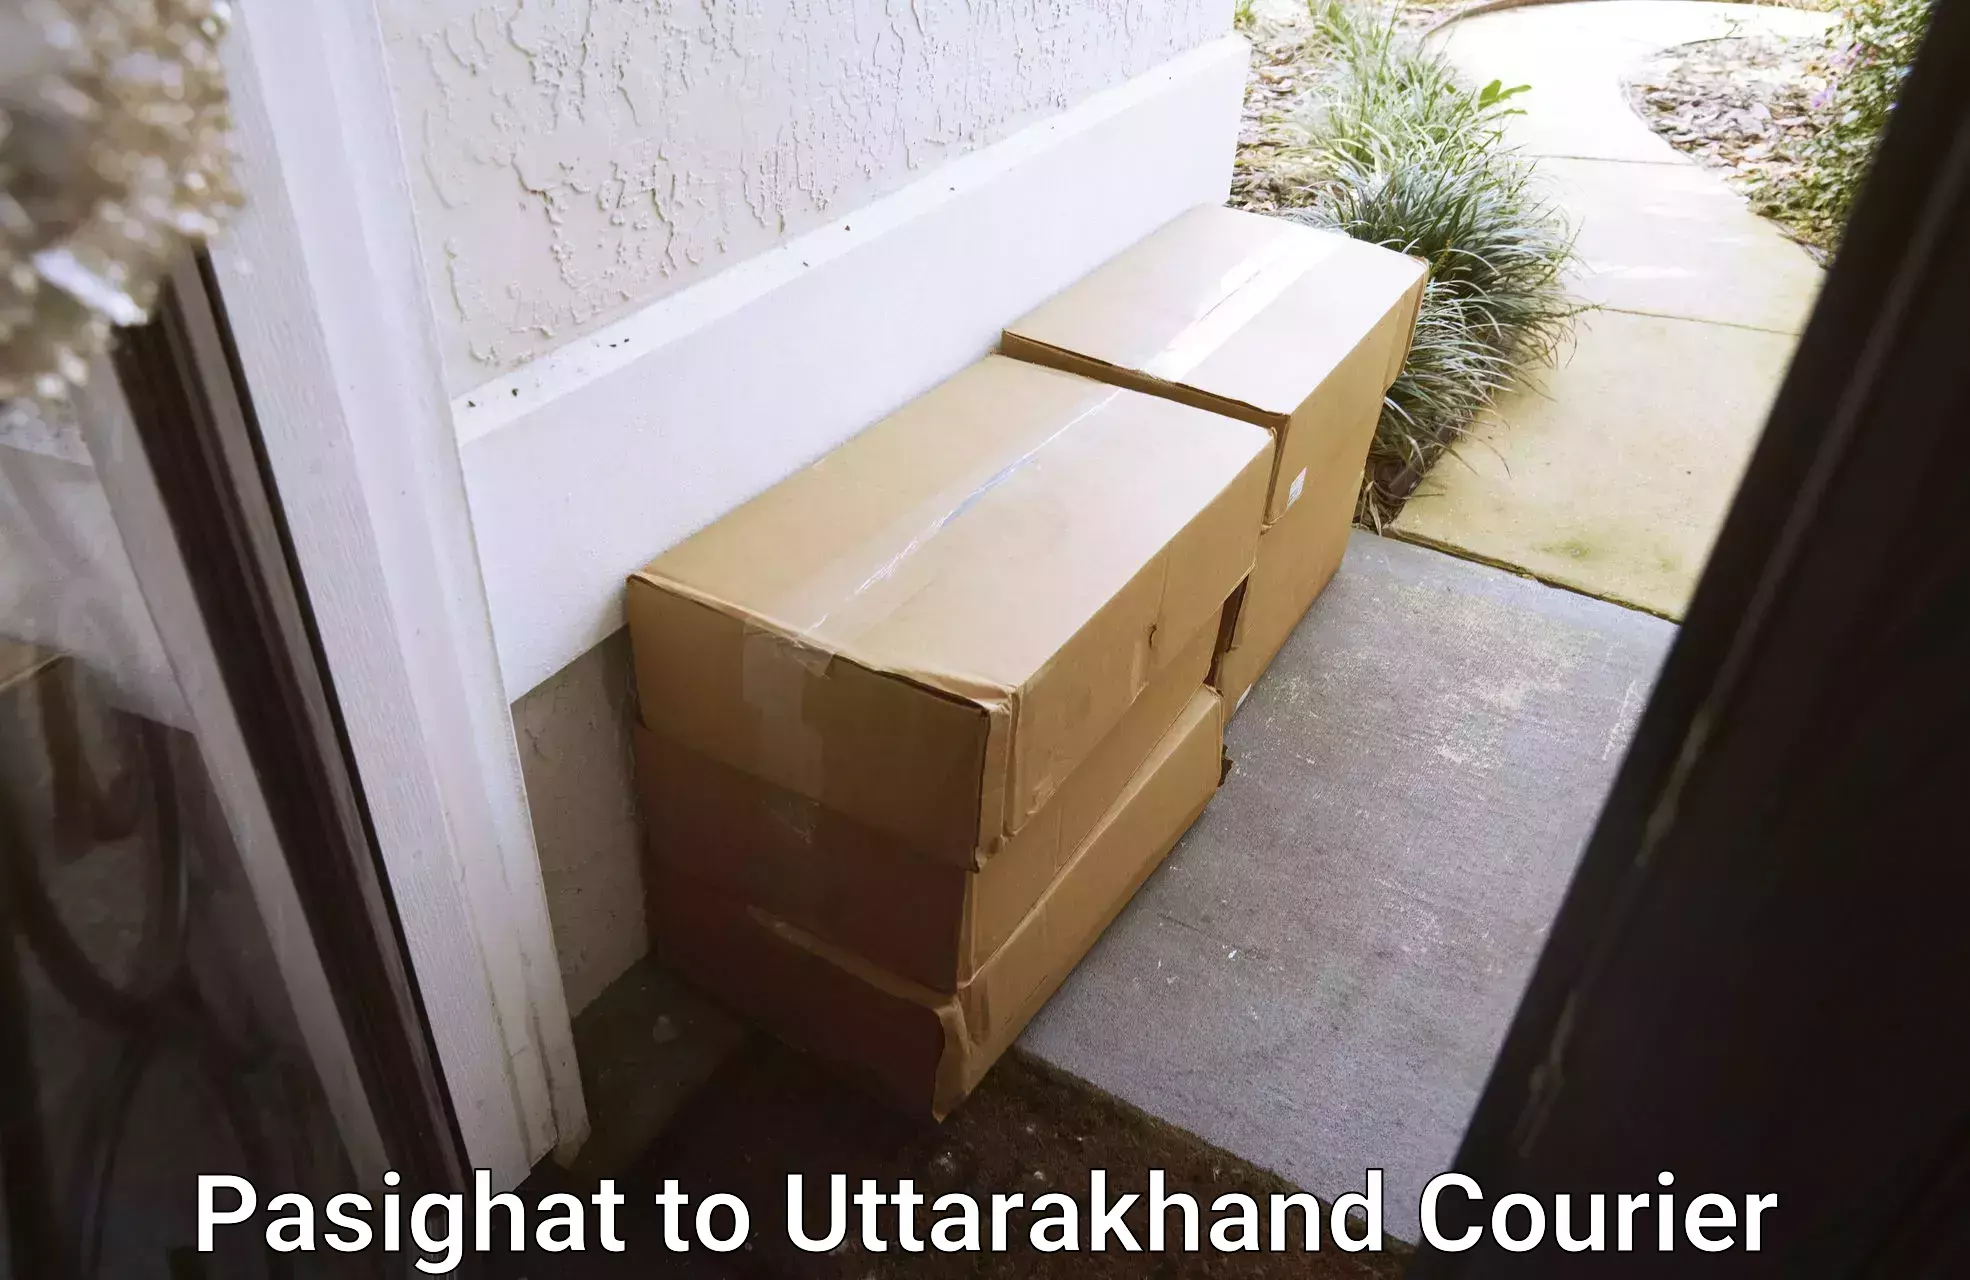 Courier service partnerships Pasighat to Udham Singh Nagar